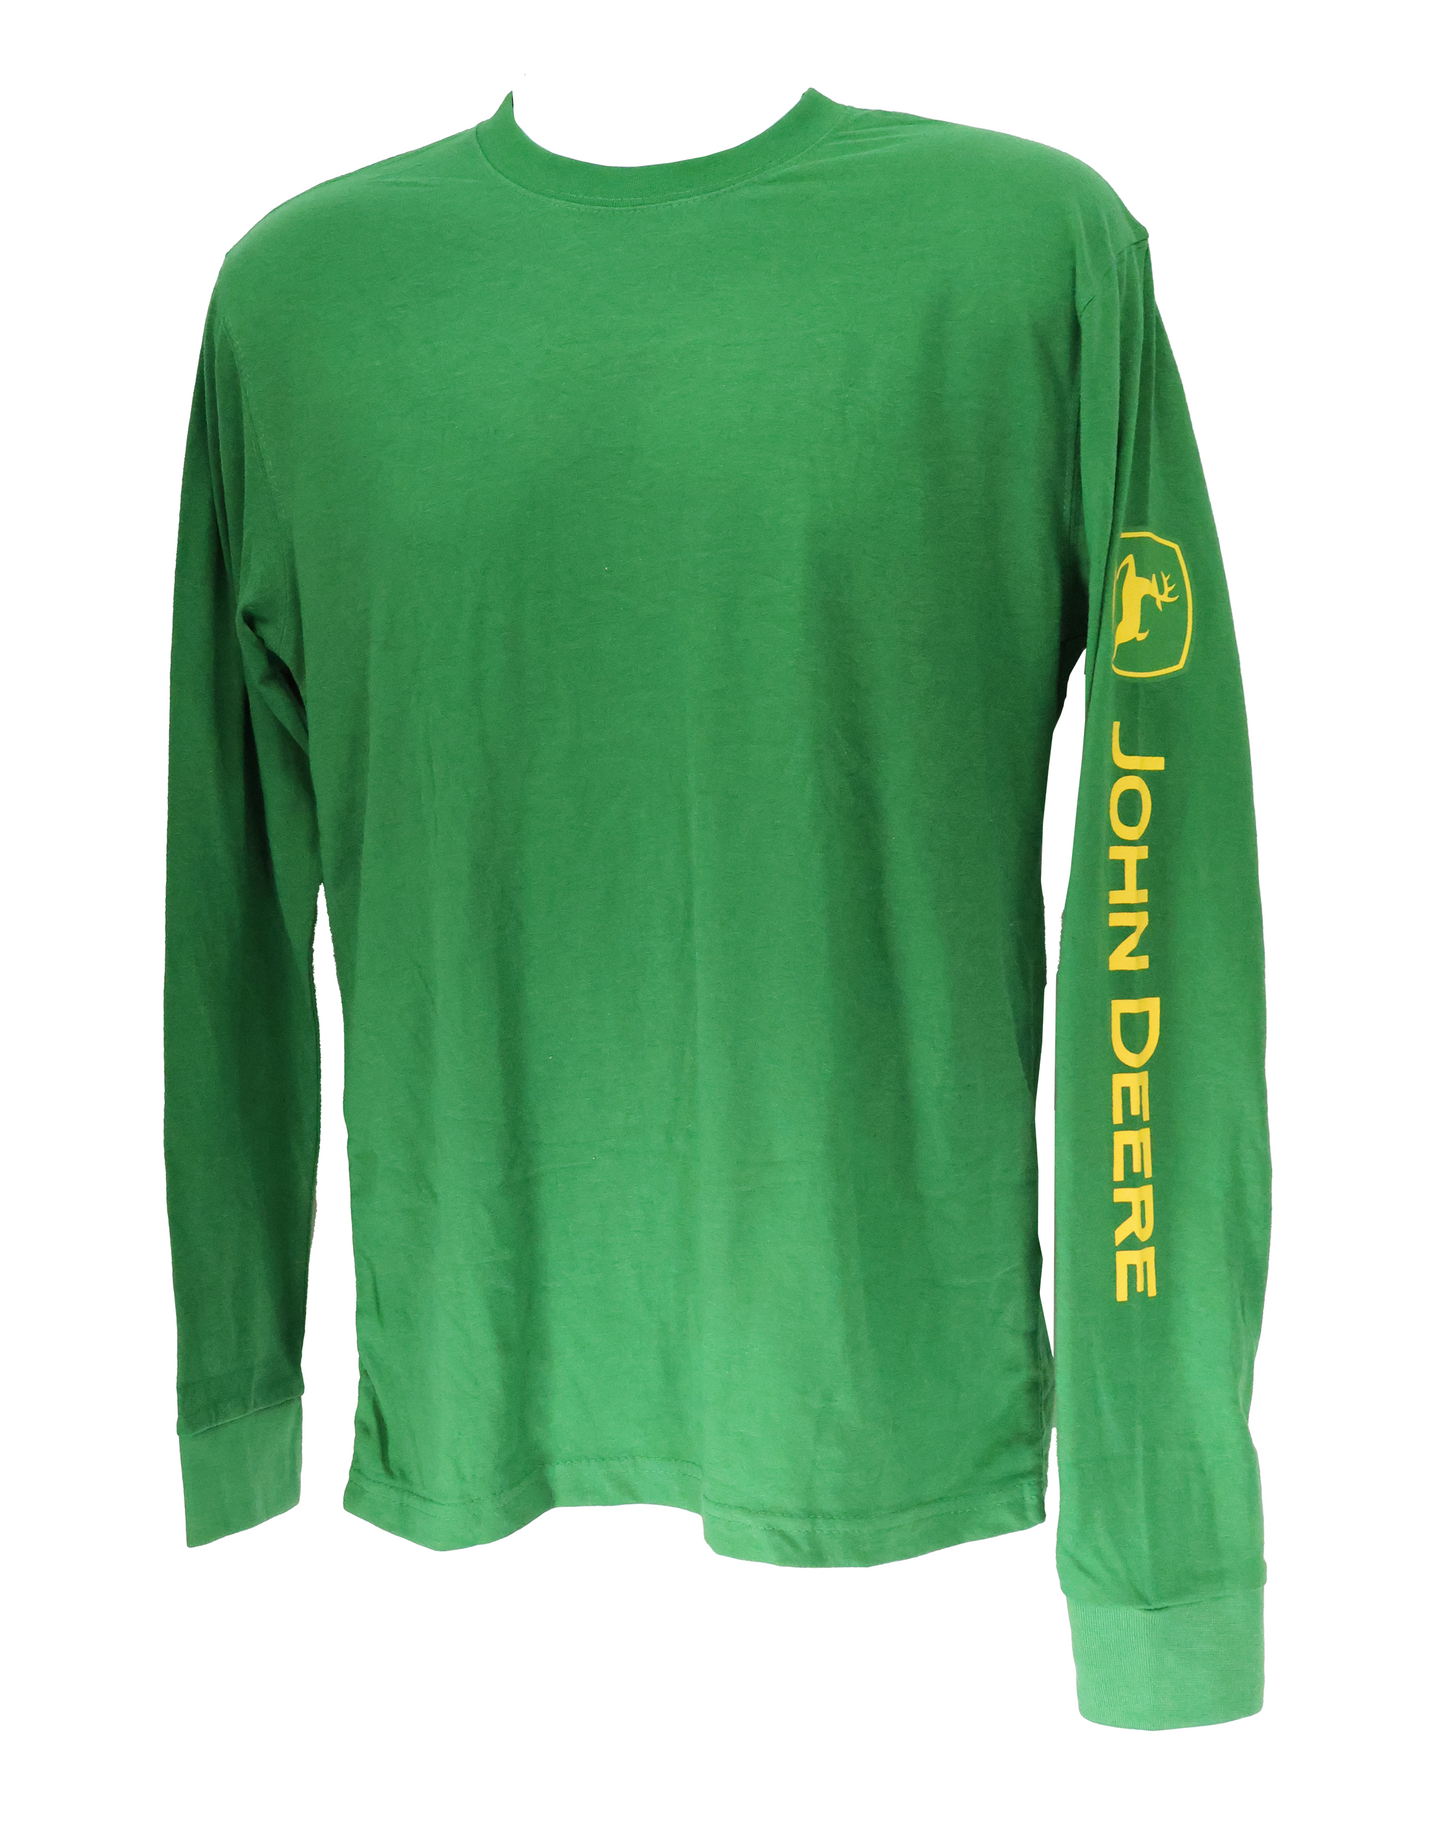 John Deere Mens Green TM Long Sleeve T-Shirt Small - LP79306